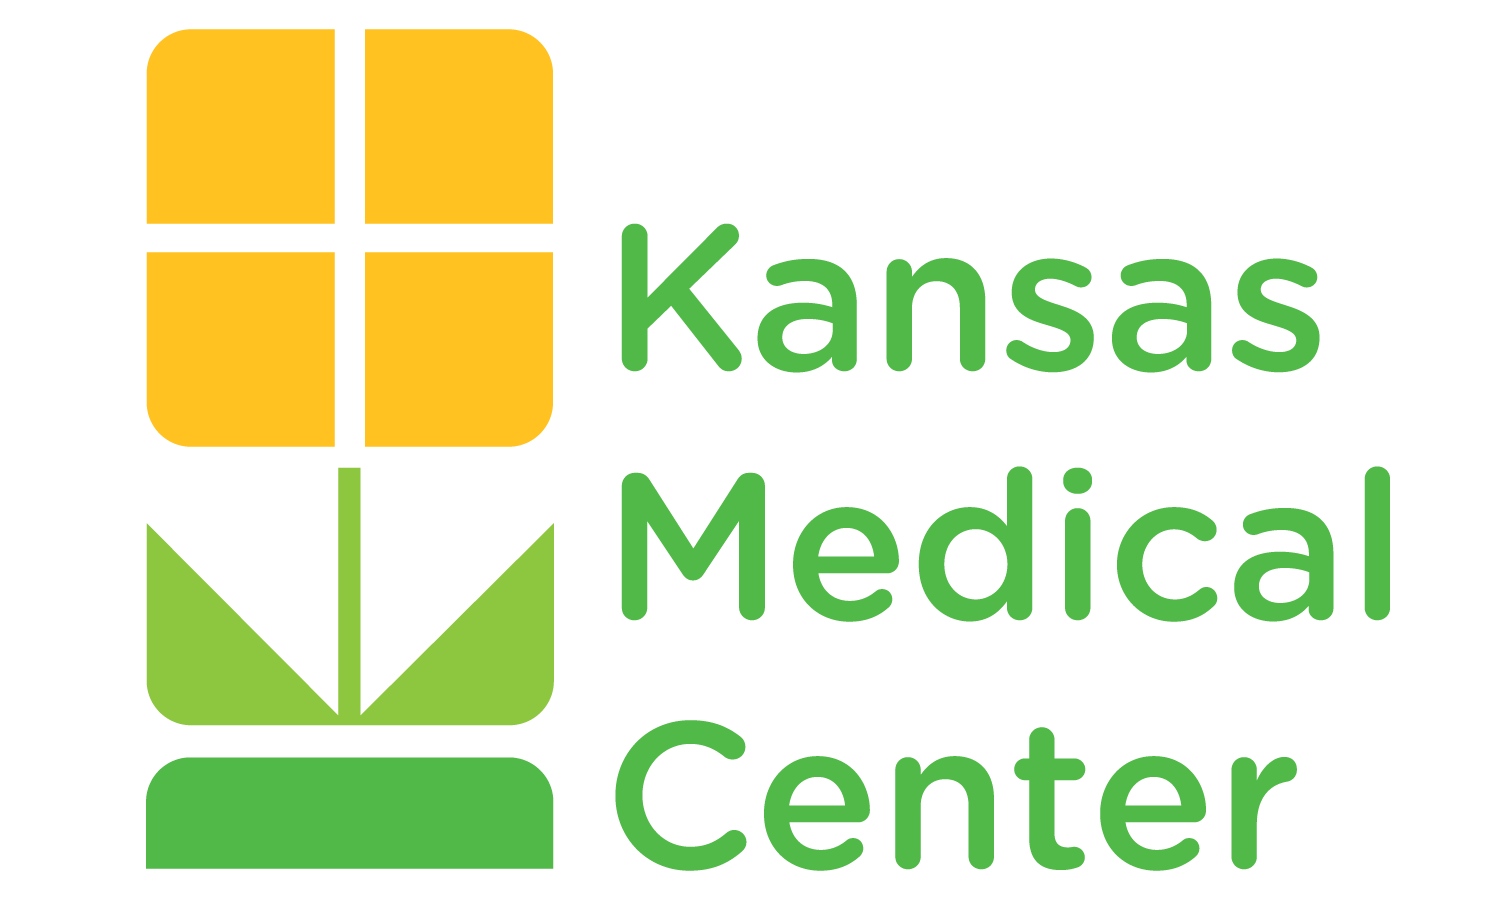 Kansas Medical Center